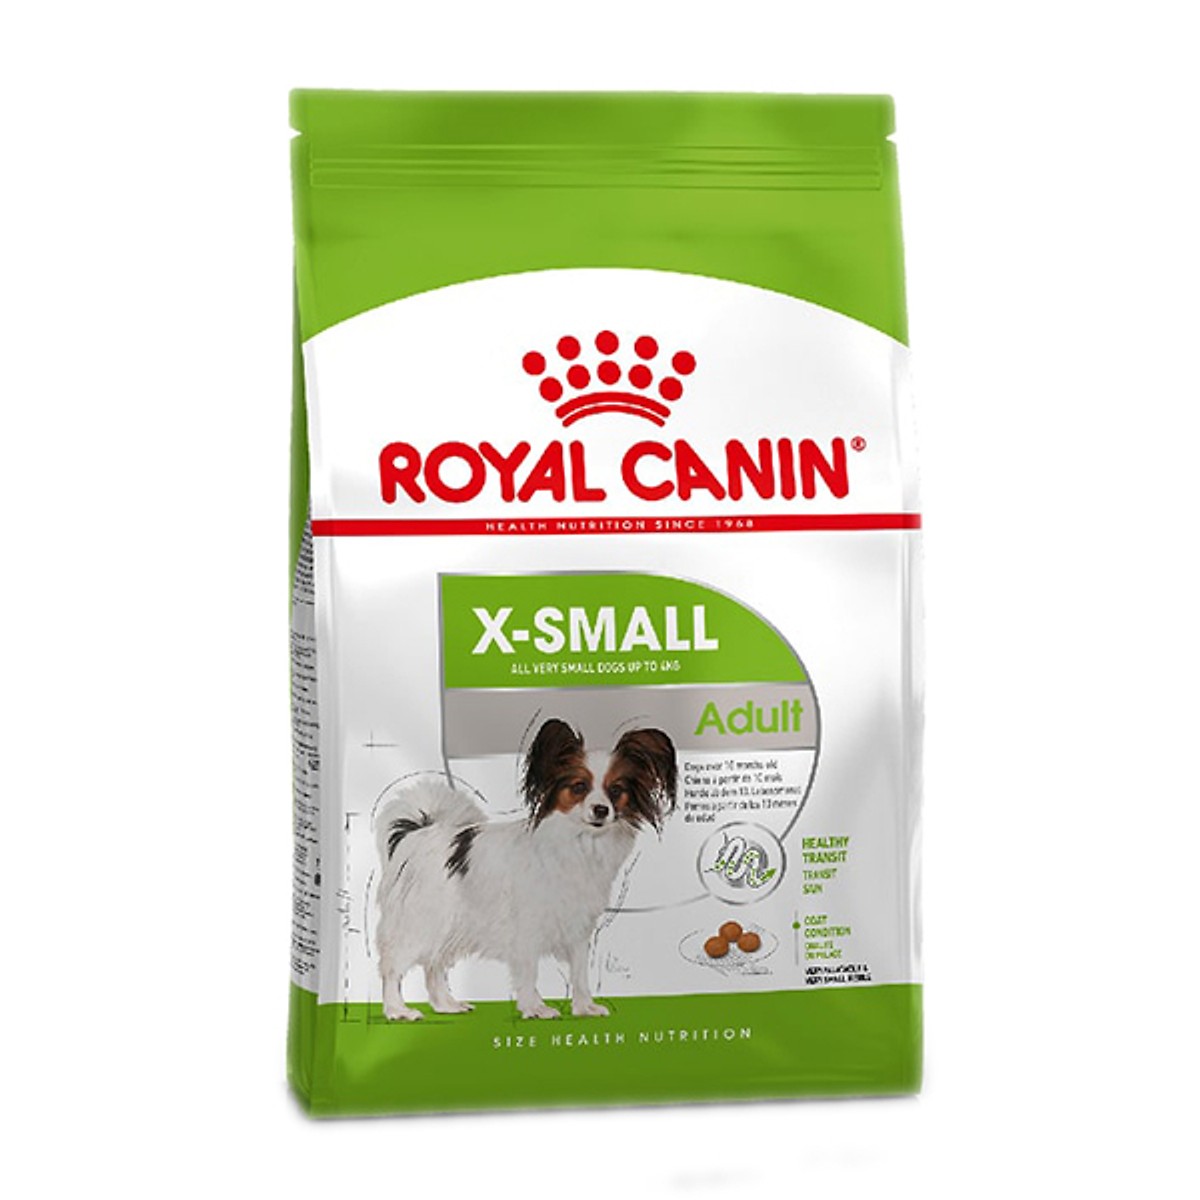 ROYAL CANIN XSMALL ADULT 500g.